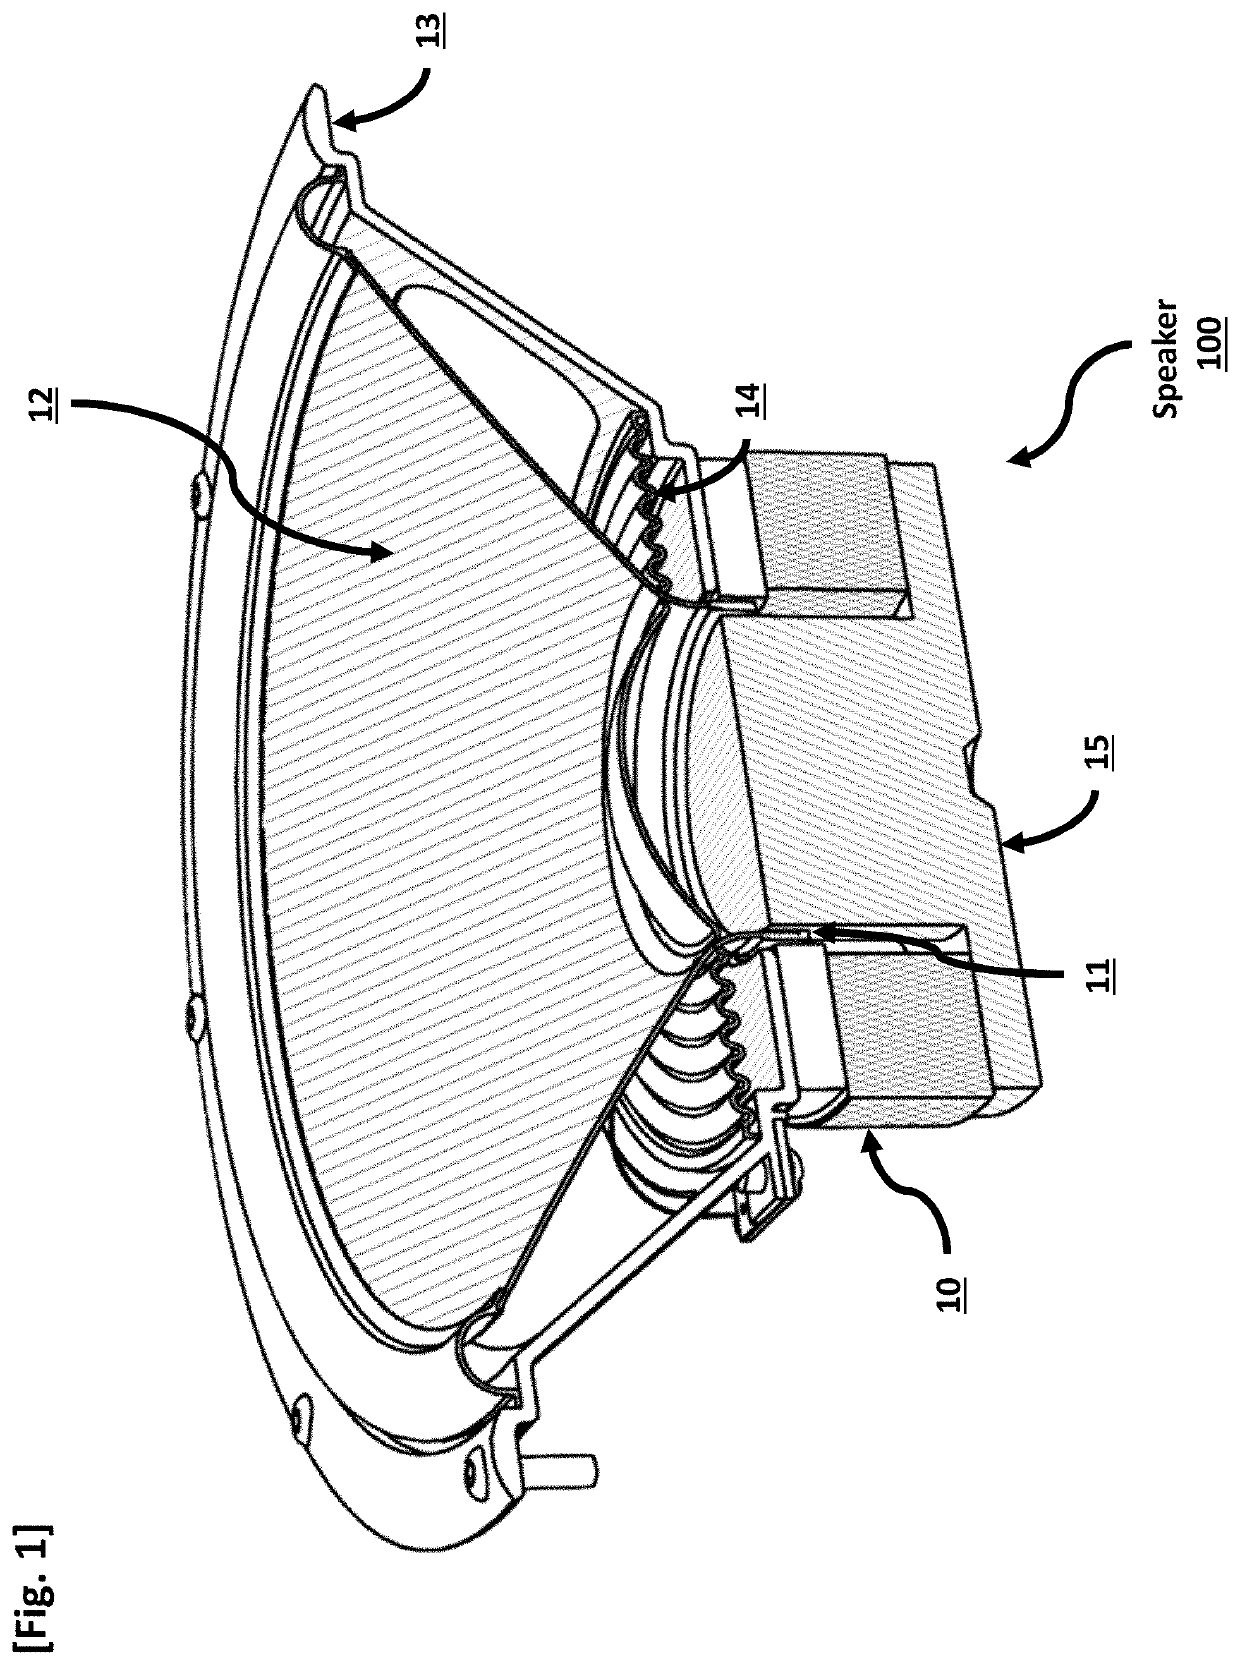 Multi-range speaker containing multiple diaphragms